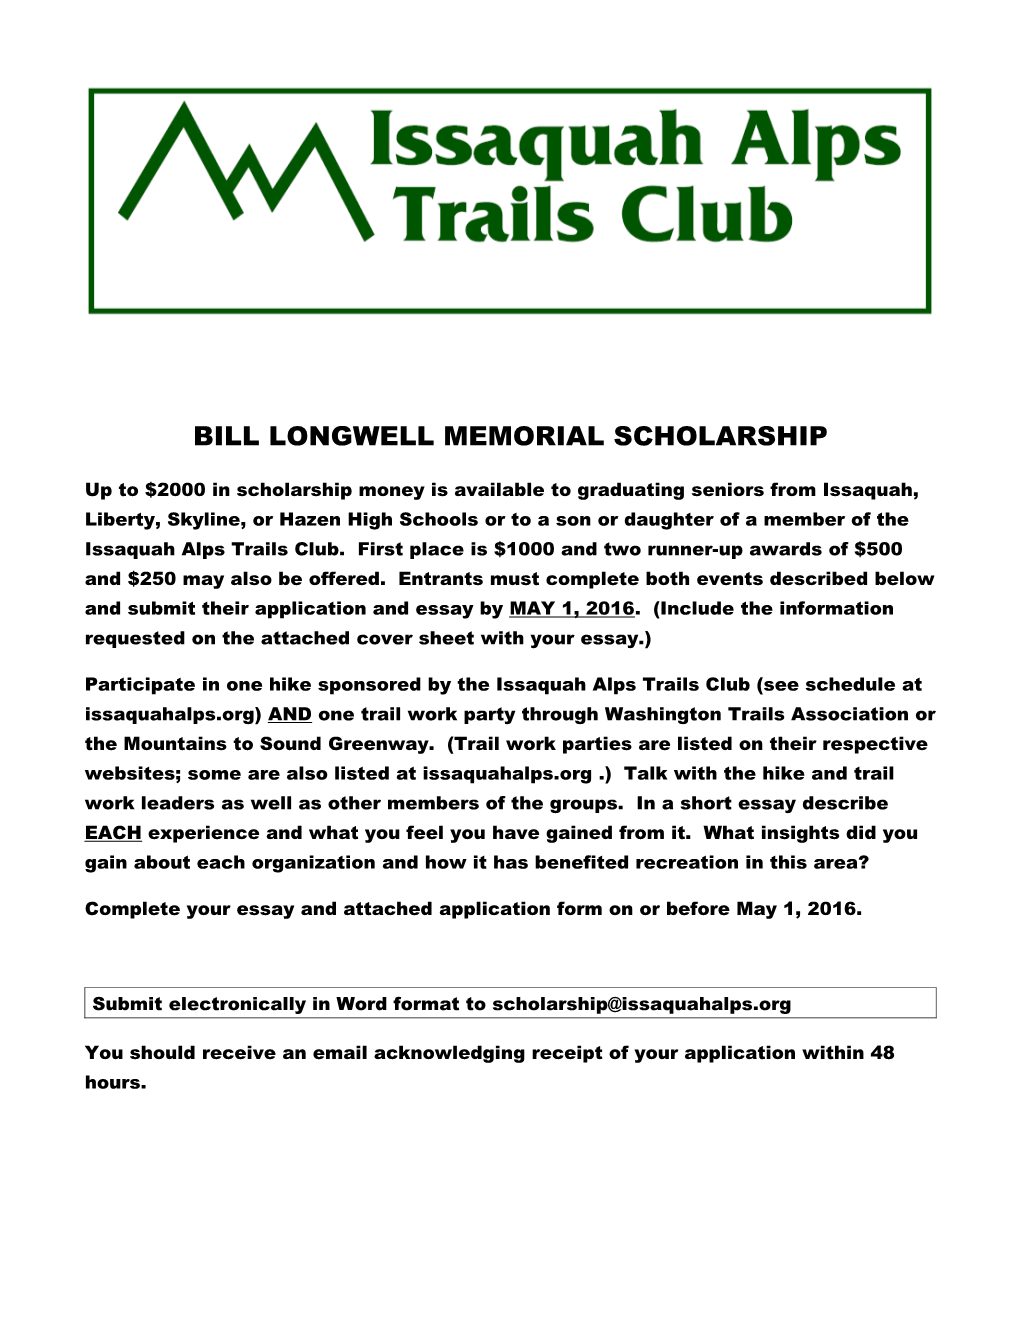 Bill Longwell Memorial Scholarship